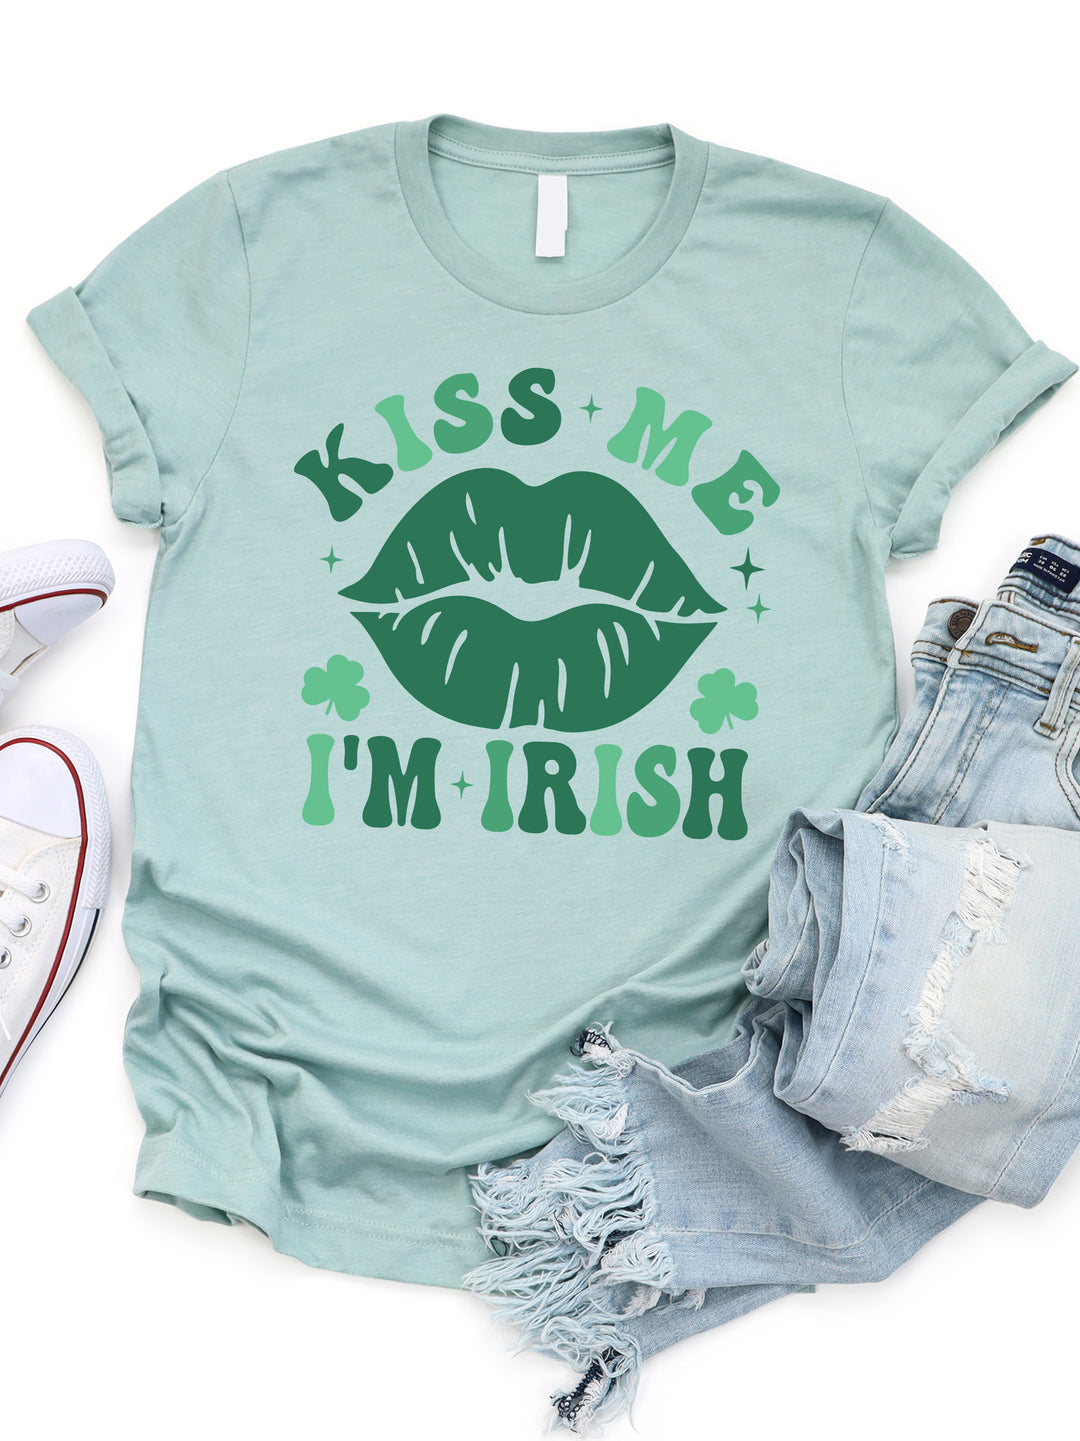 Kiss me I'm Irish Graphic Tee